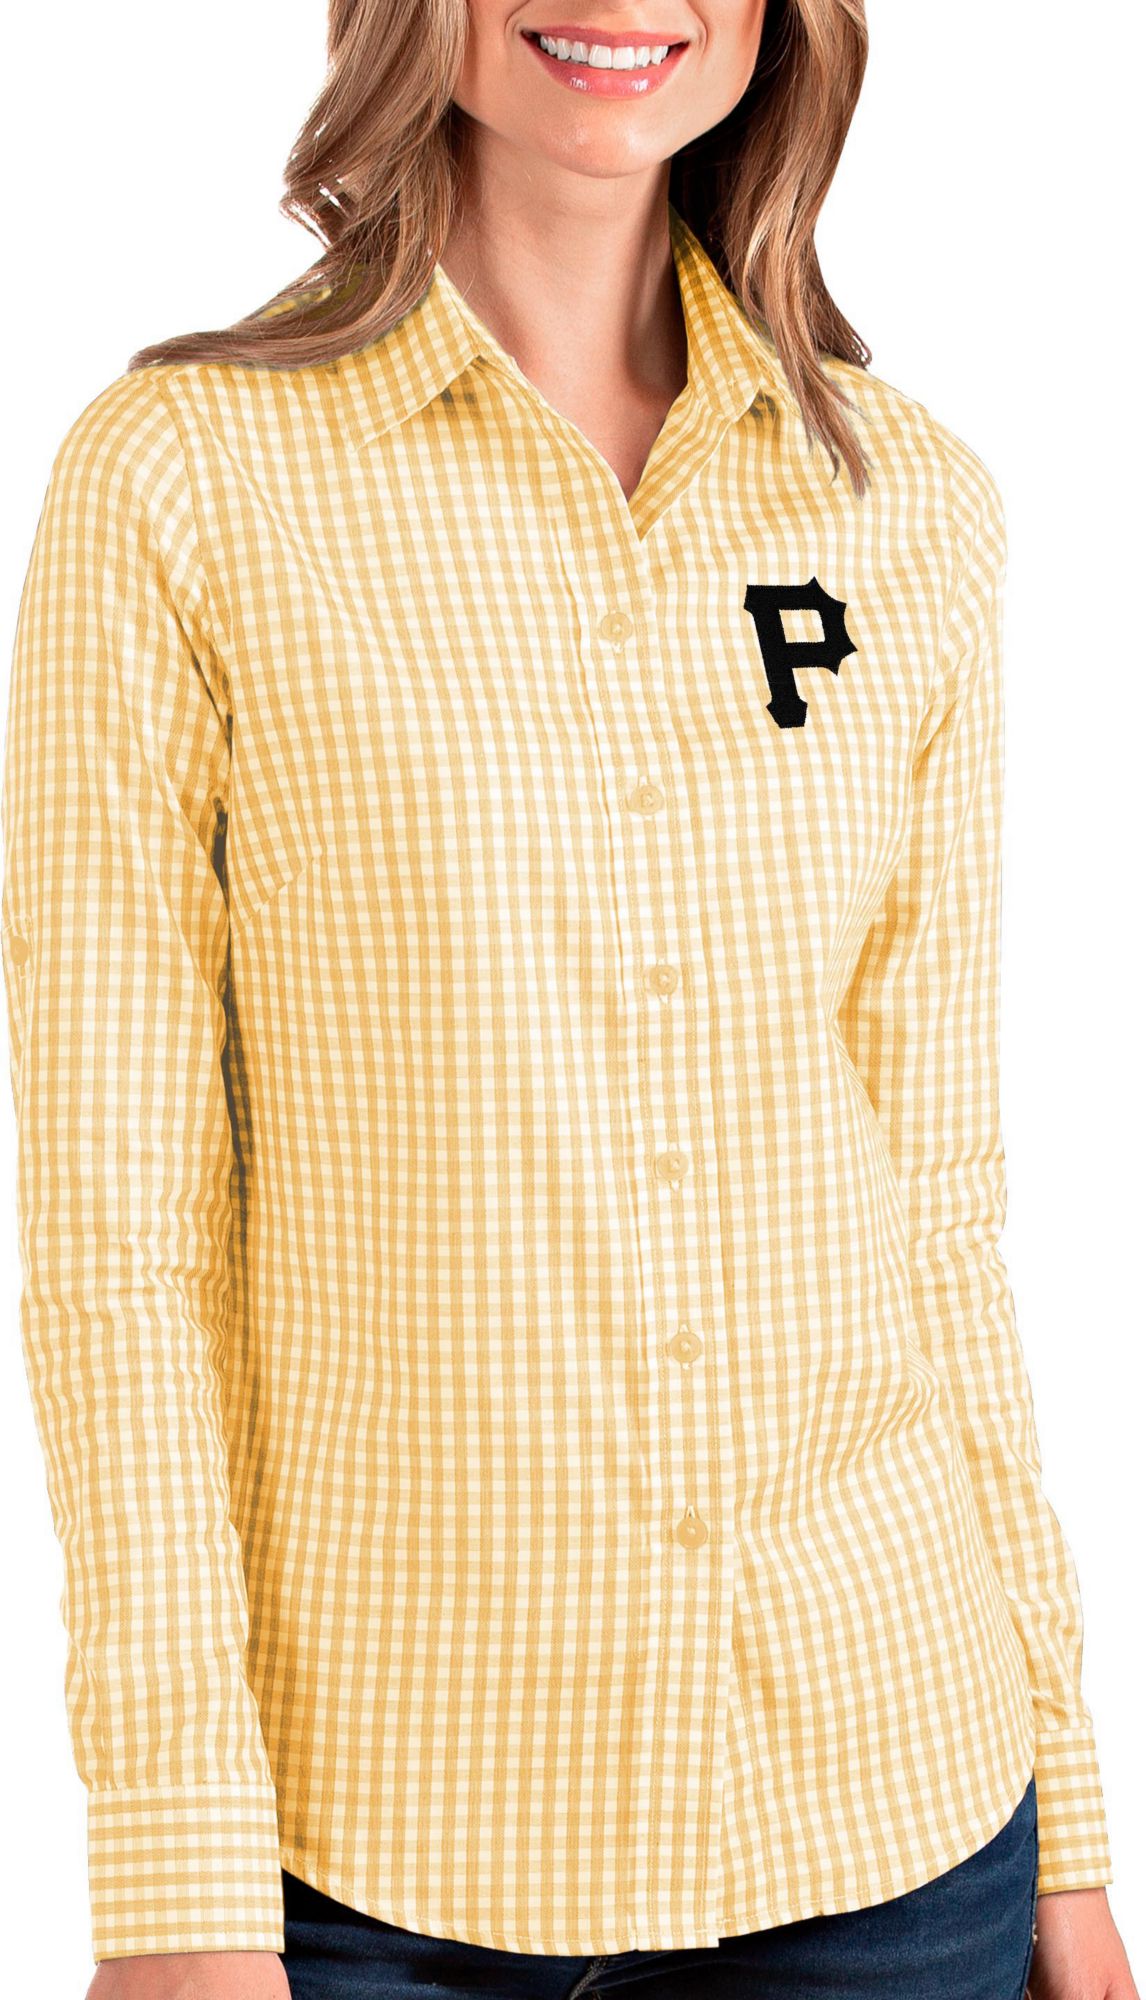 pittsburgh pirates button down shirt